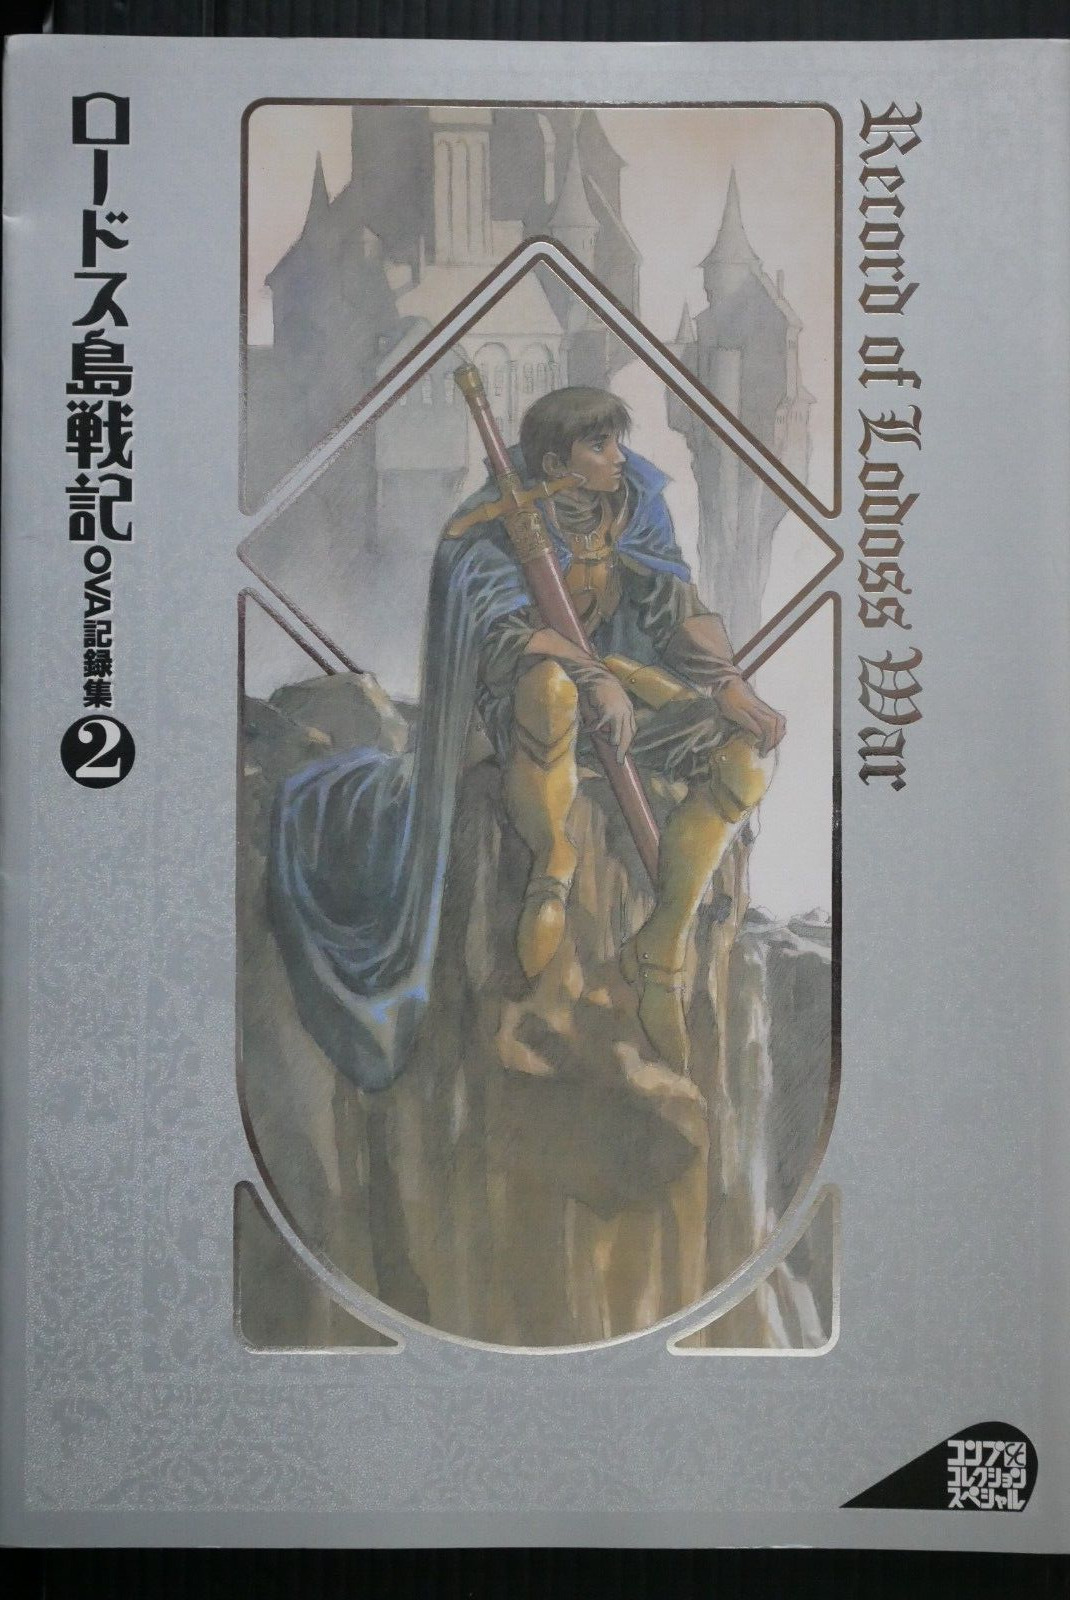 JAPAN Record of Lodoss War OVA Kirokushuu #2 (Art Guide Book)